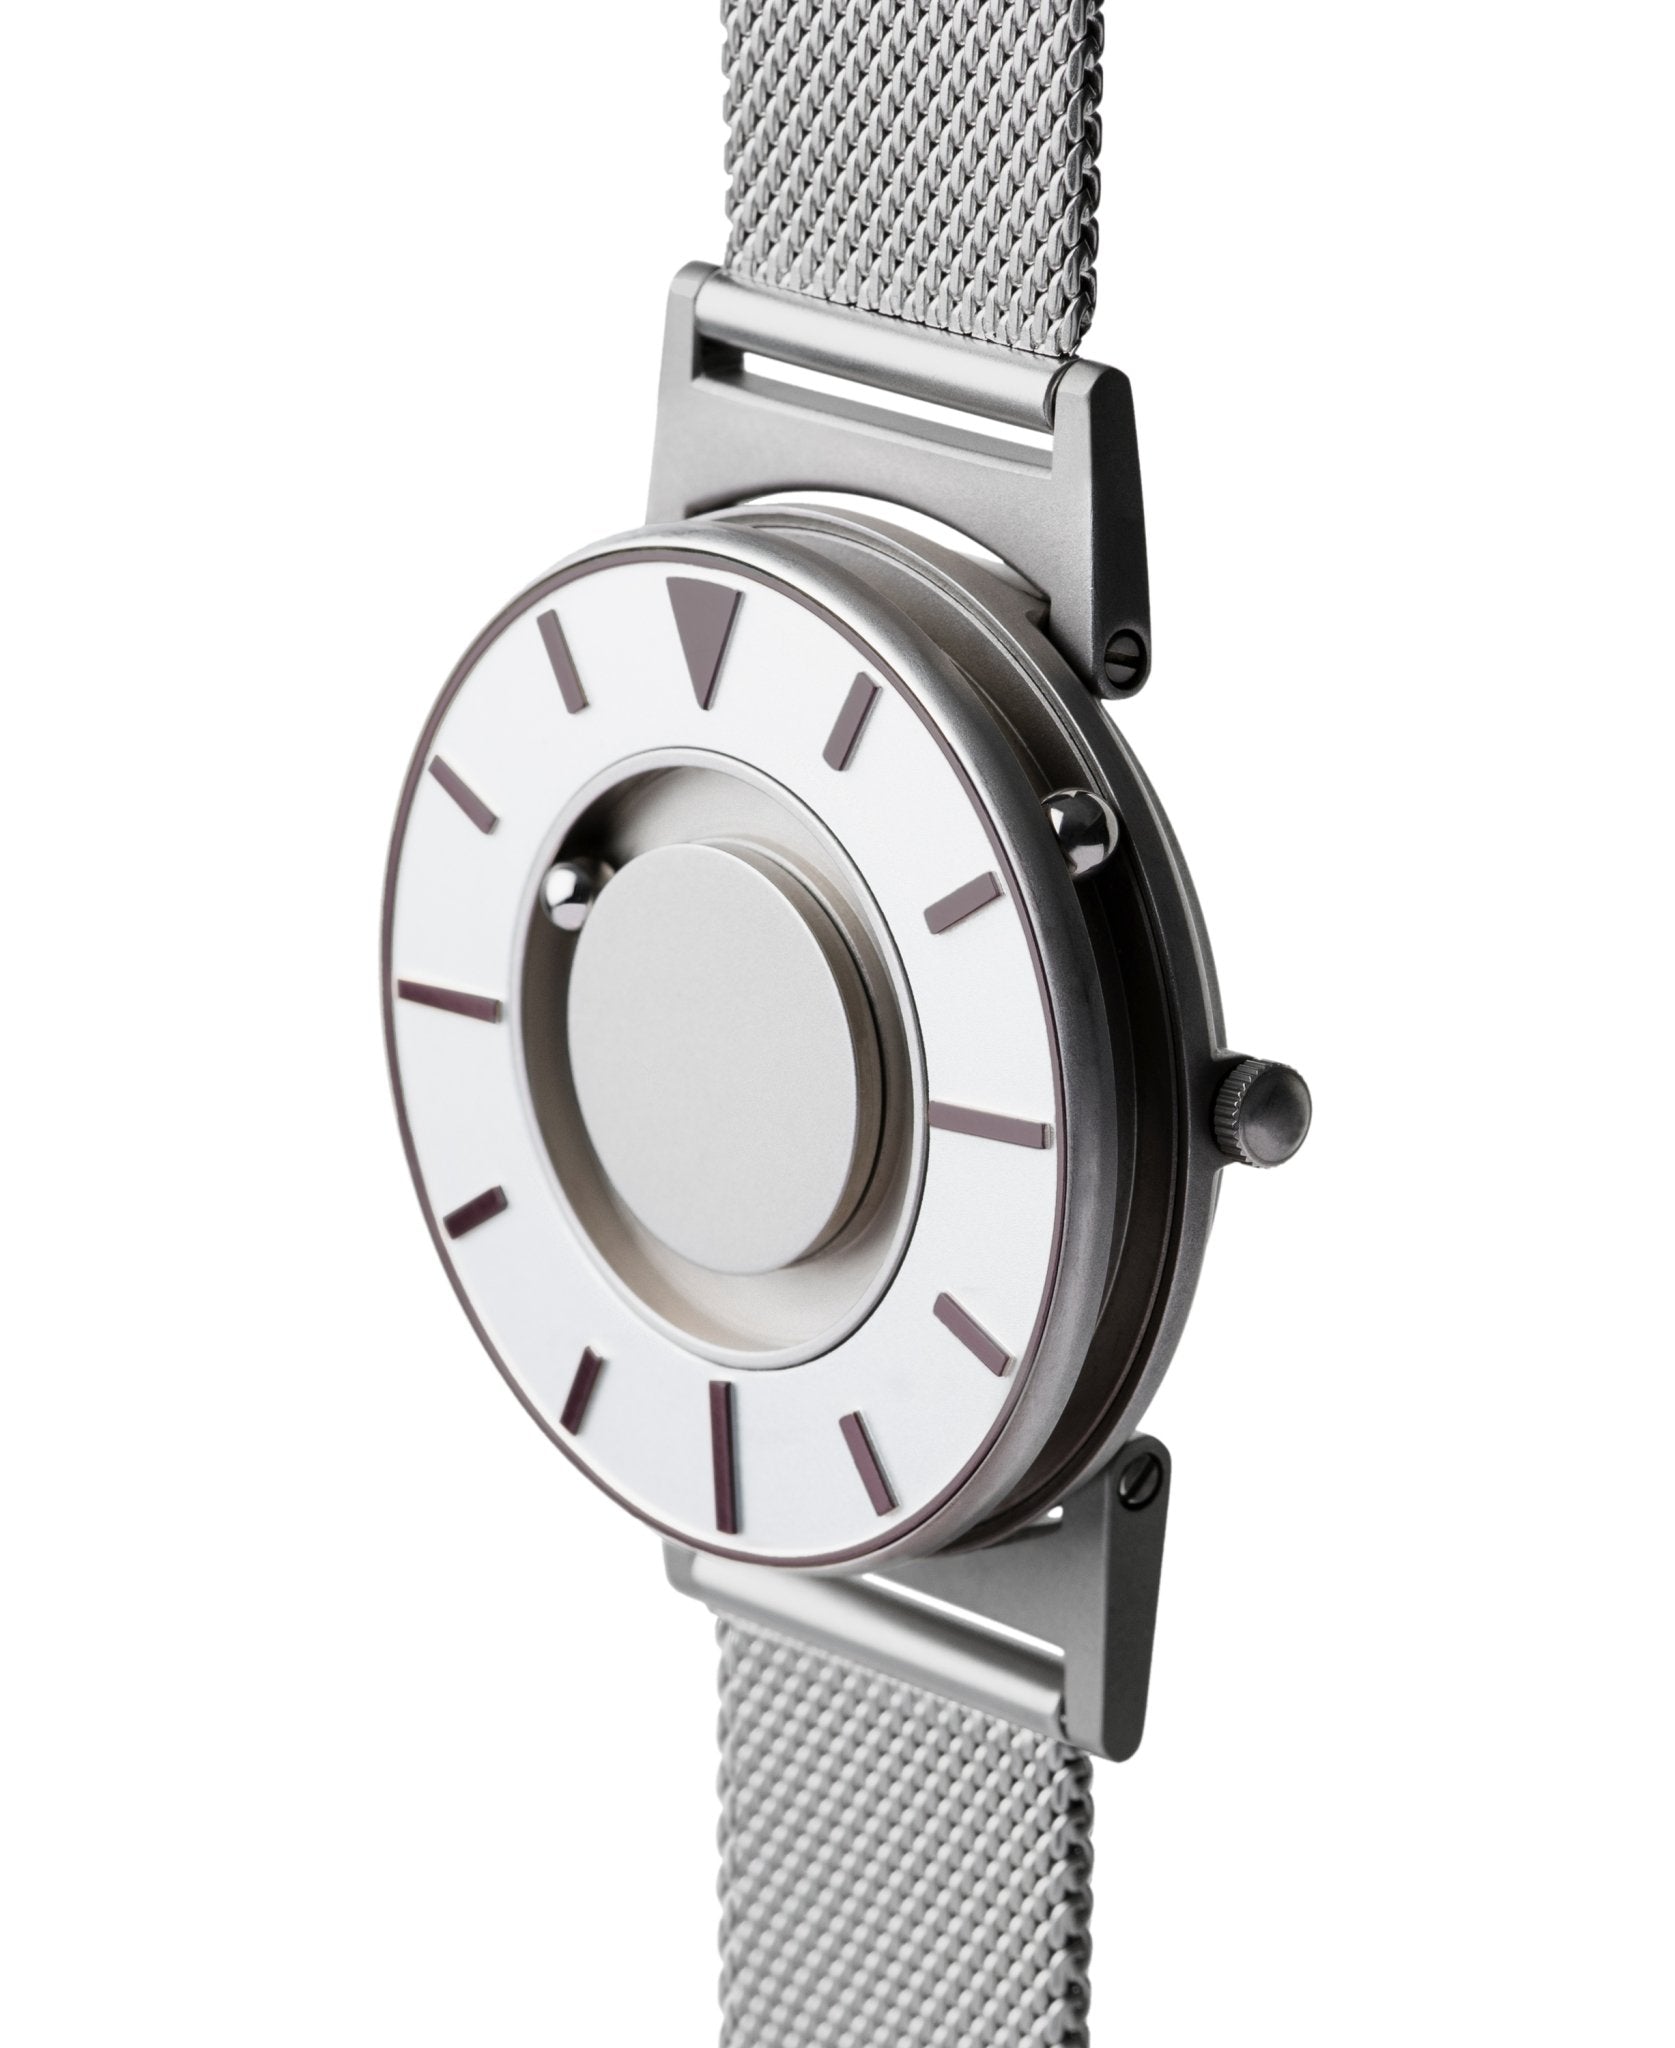 Eone Bradley Compass Iris - Watches & Crystals